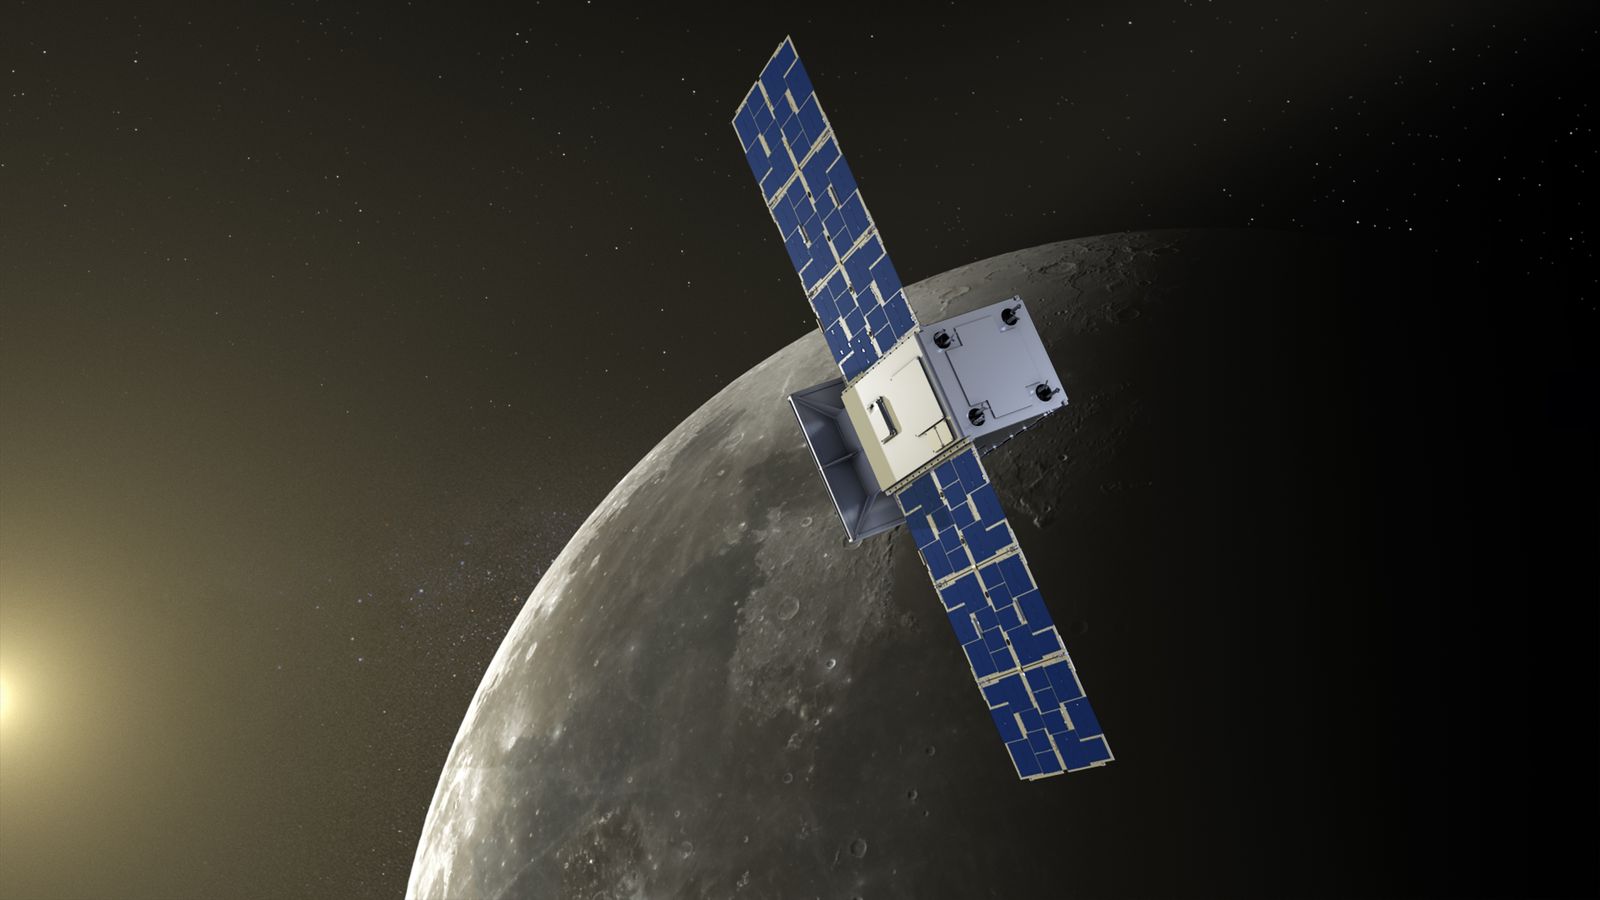 NASA Launches CubeSat to Orbit the Moon | Smart News| Smithsonian Magazine